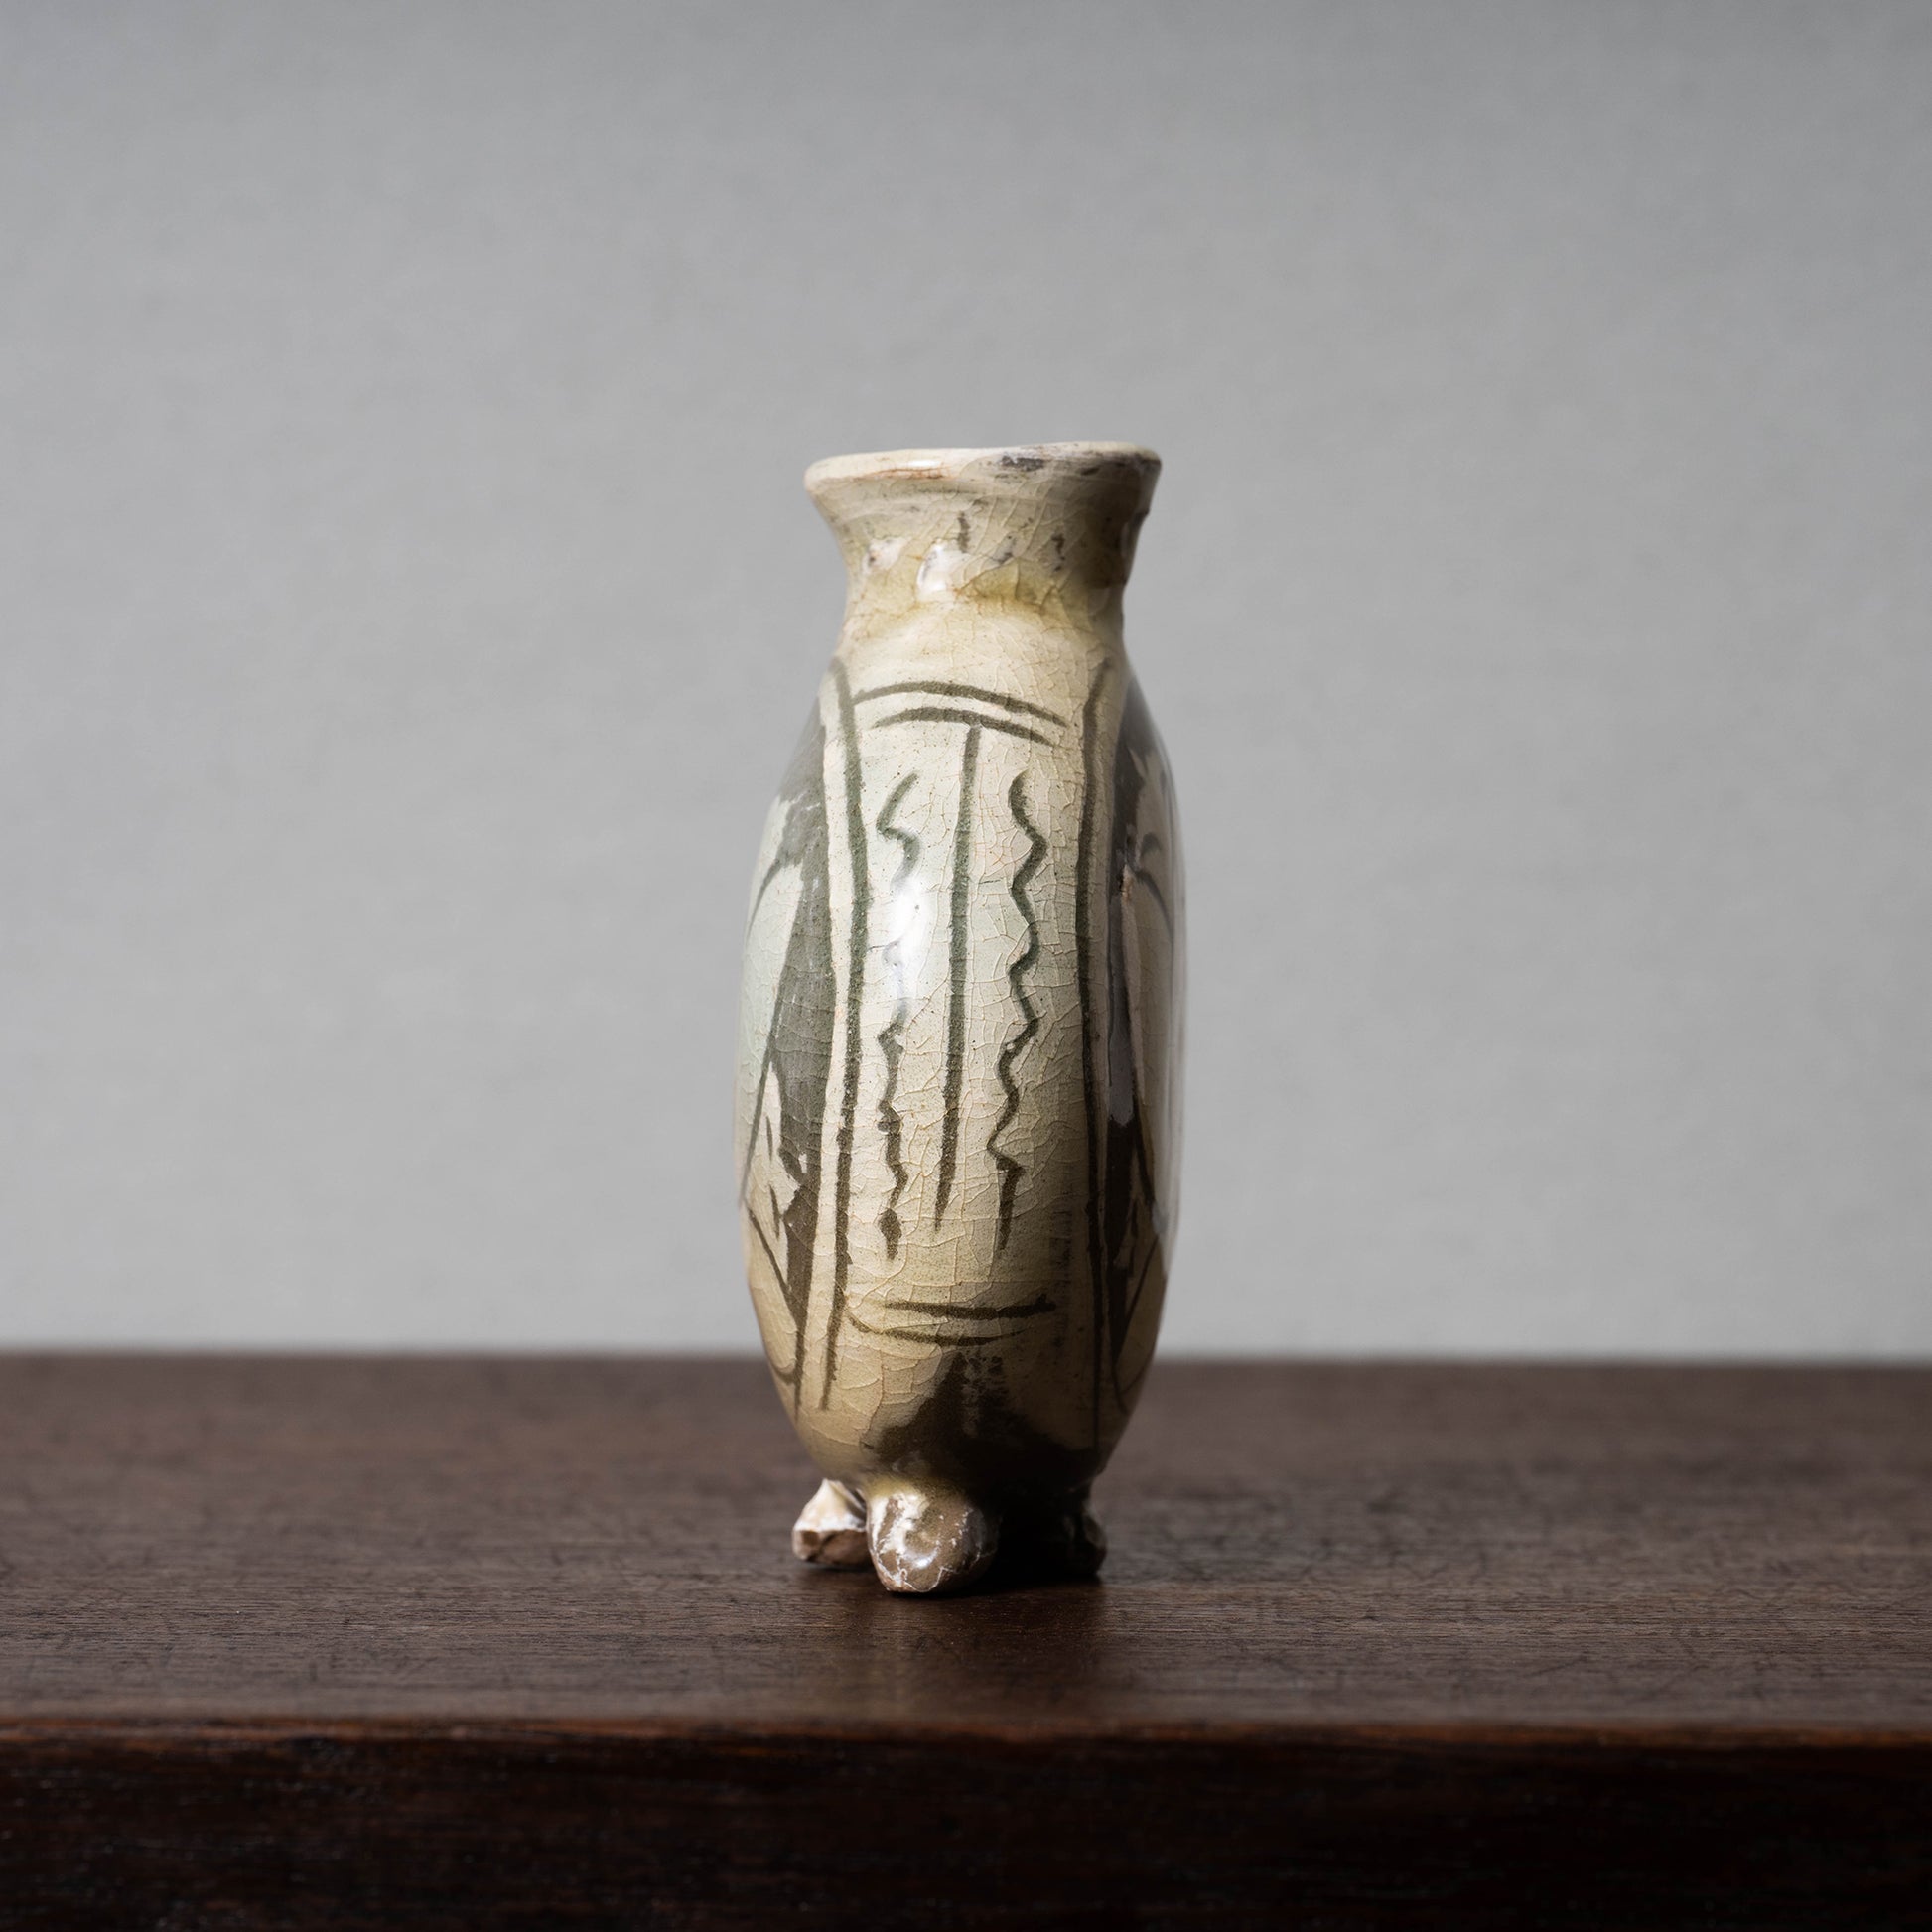 Vase Buncheong Gray w/ Inlaid Lotus